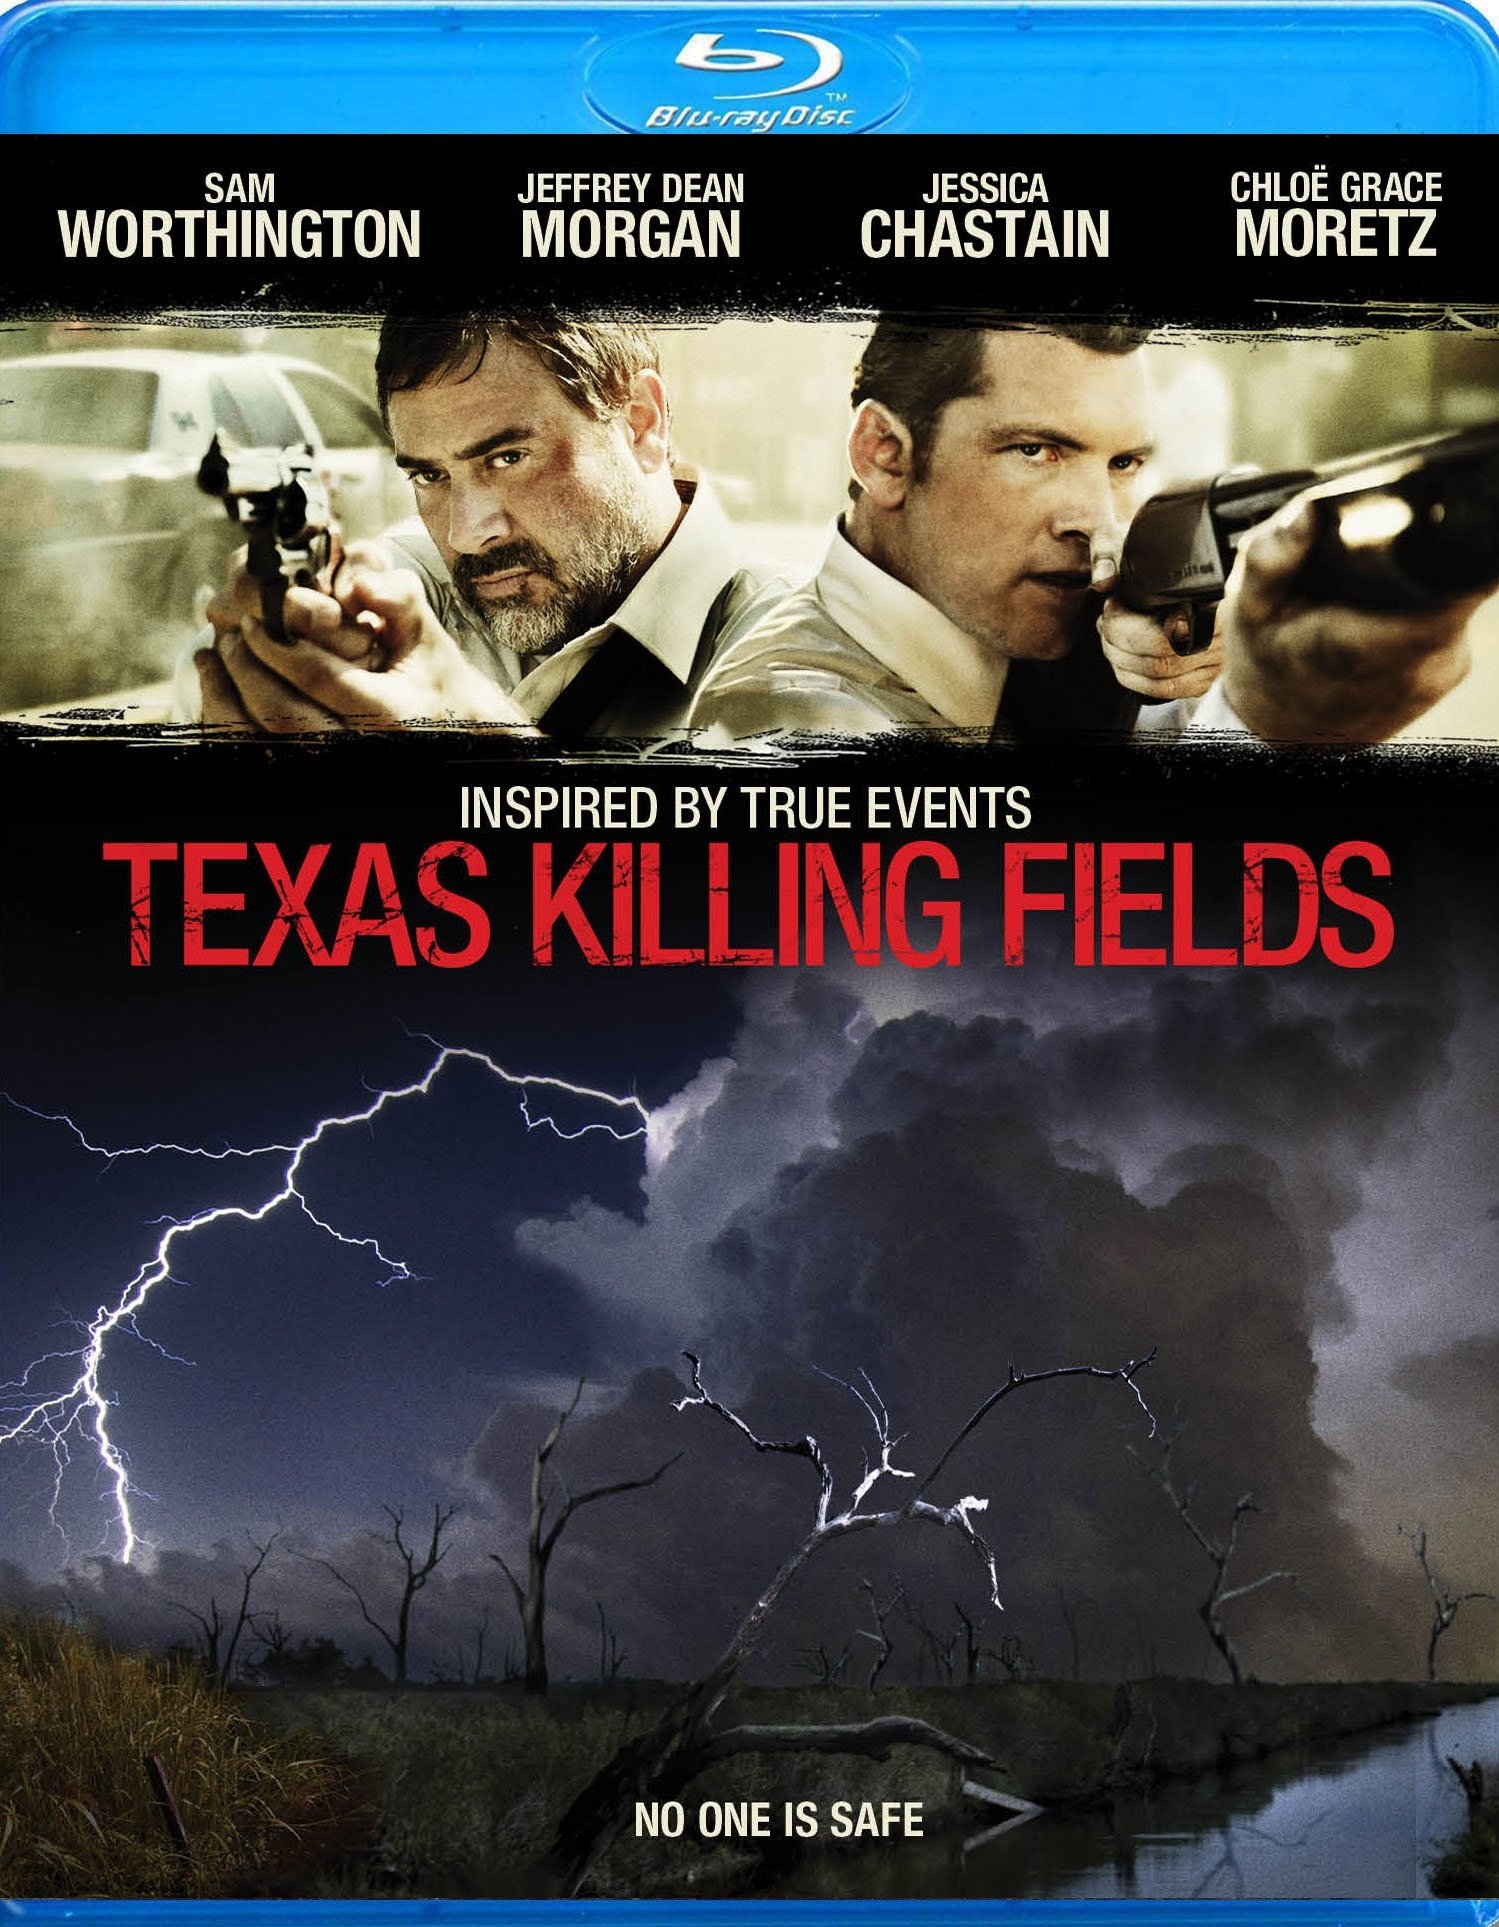 Texas Killing Fields Backgrounds, Compatible - PC, Mobile, Gadgets| 1499x1927 px